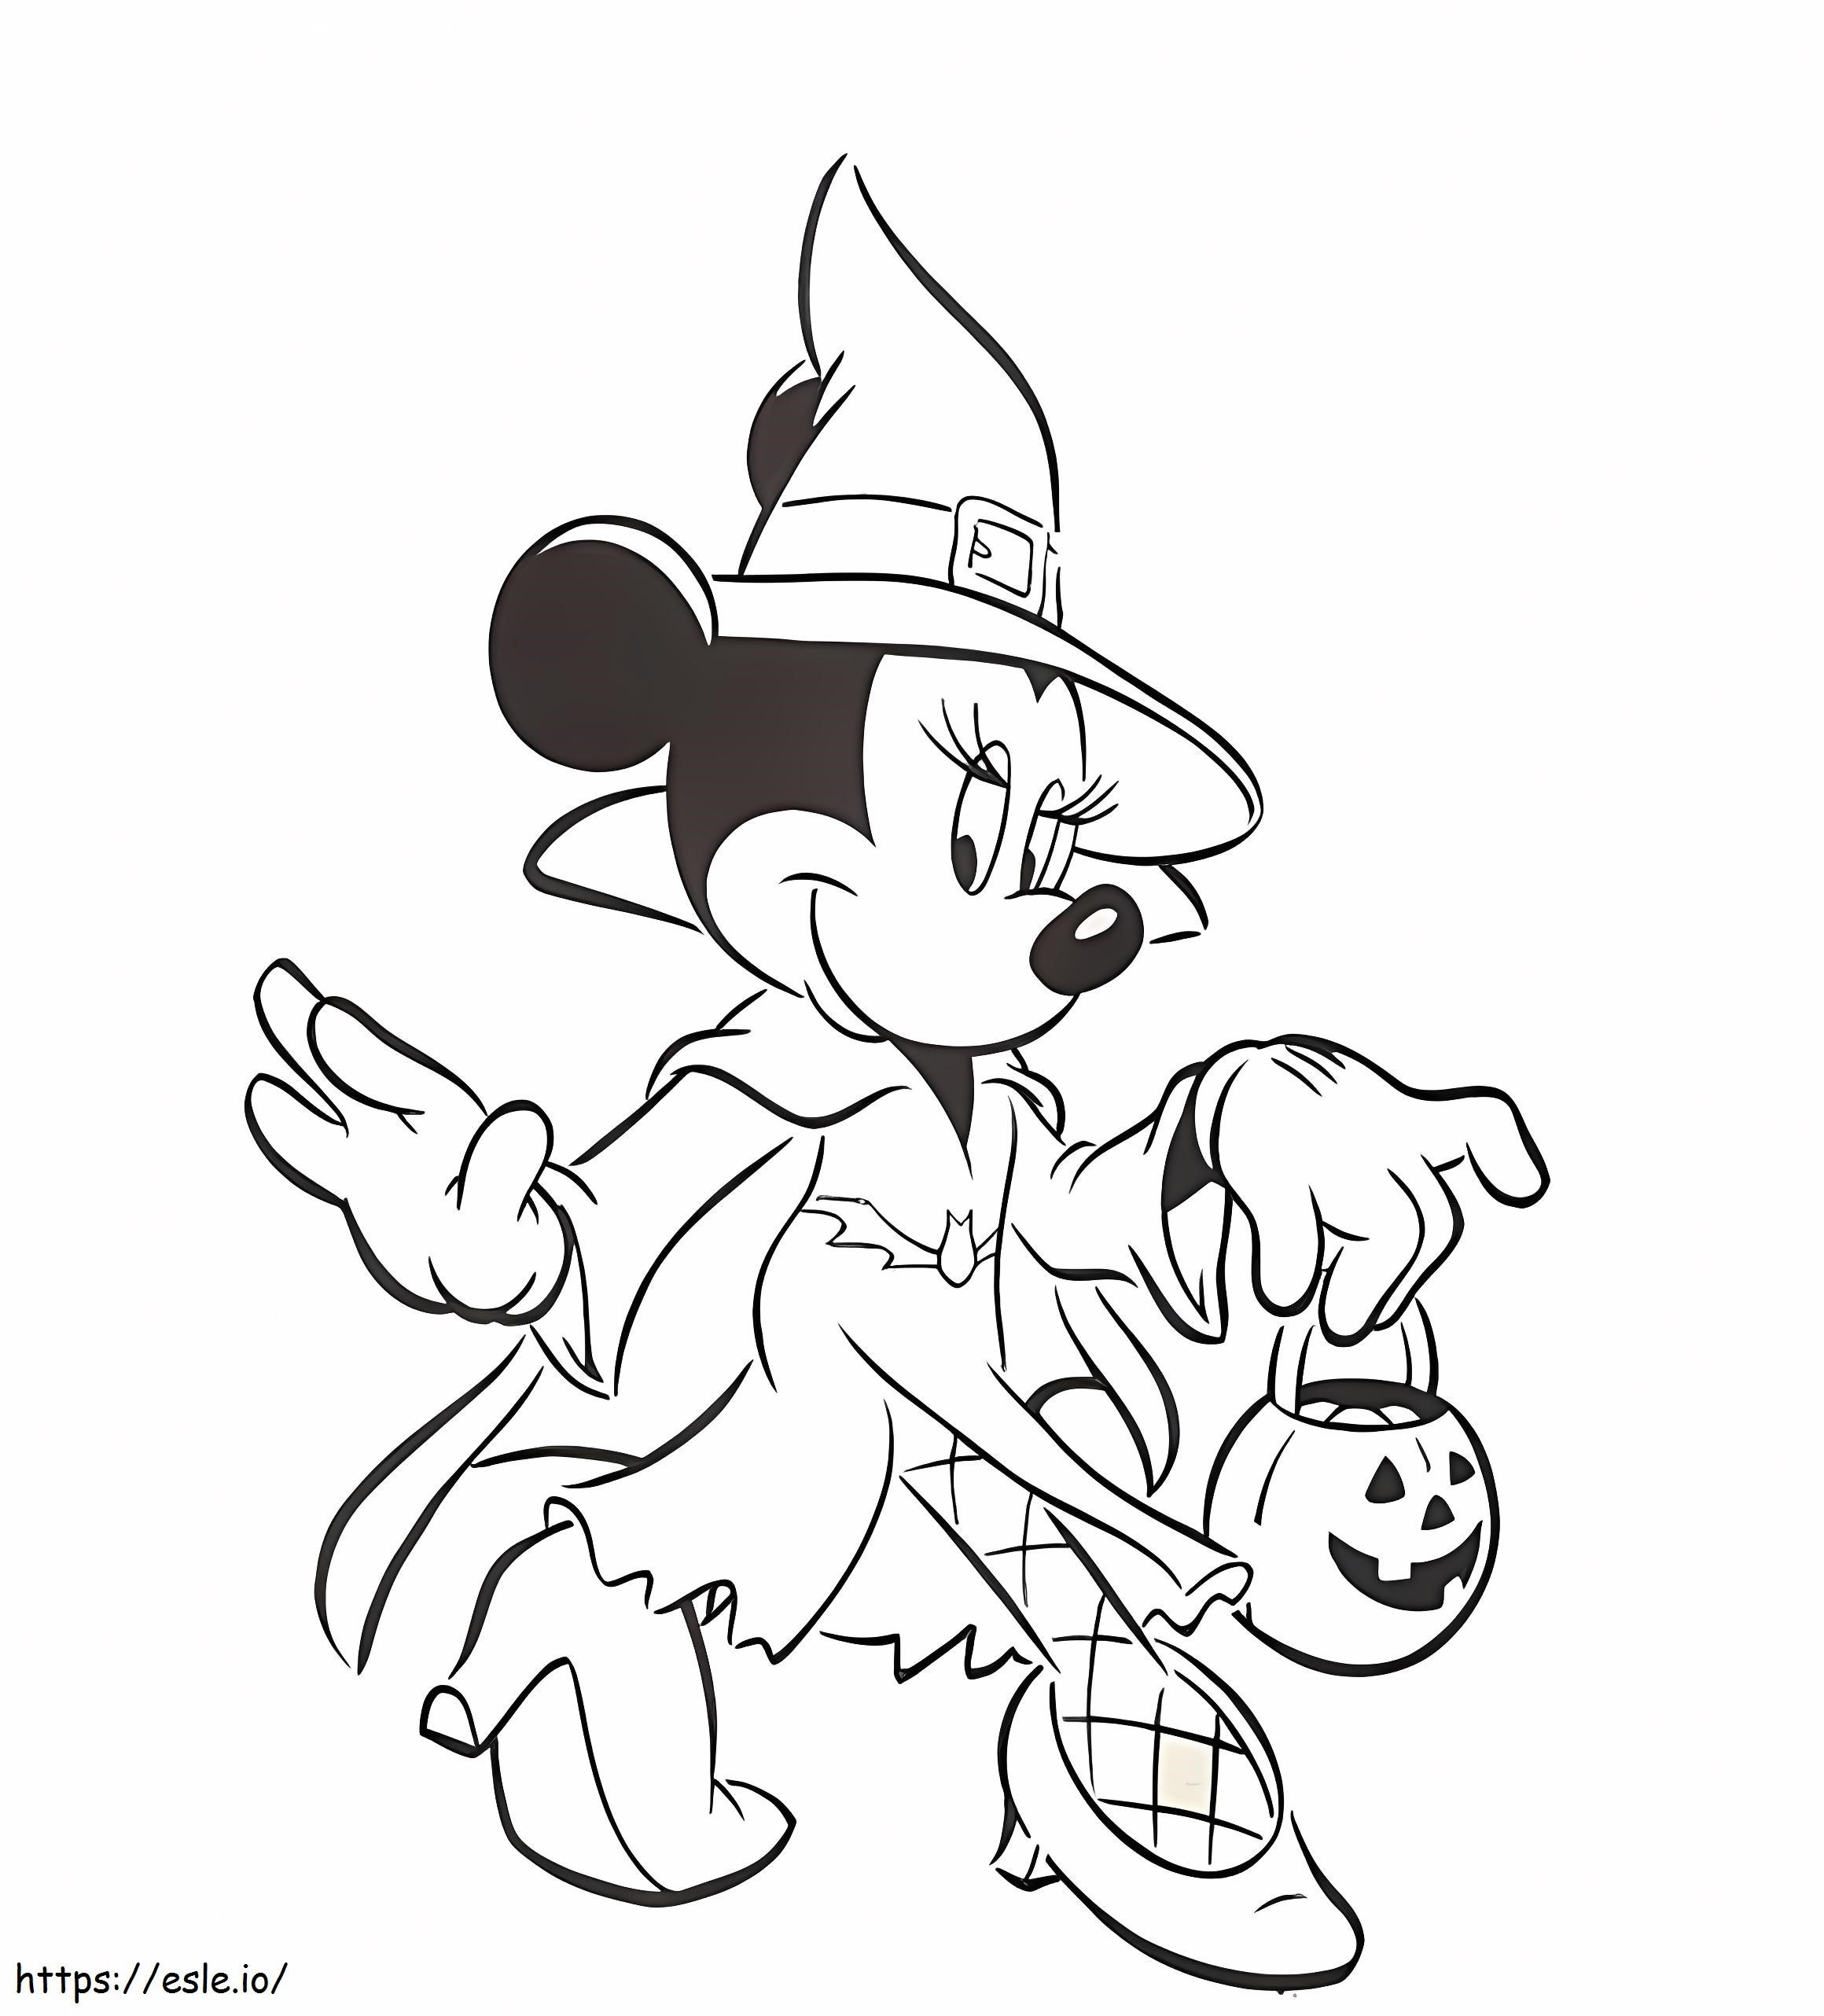 1539682580 Abóbora e rato Halloween para imprimir gratuitamente para colorir